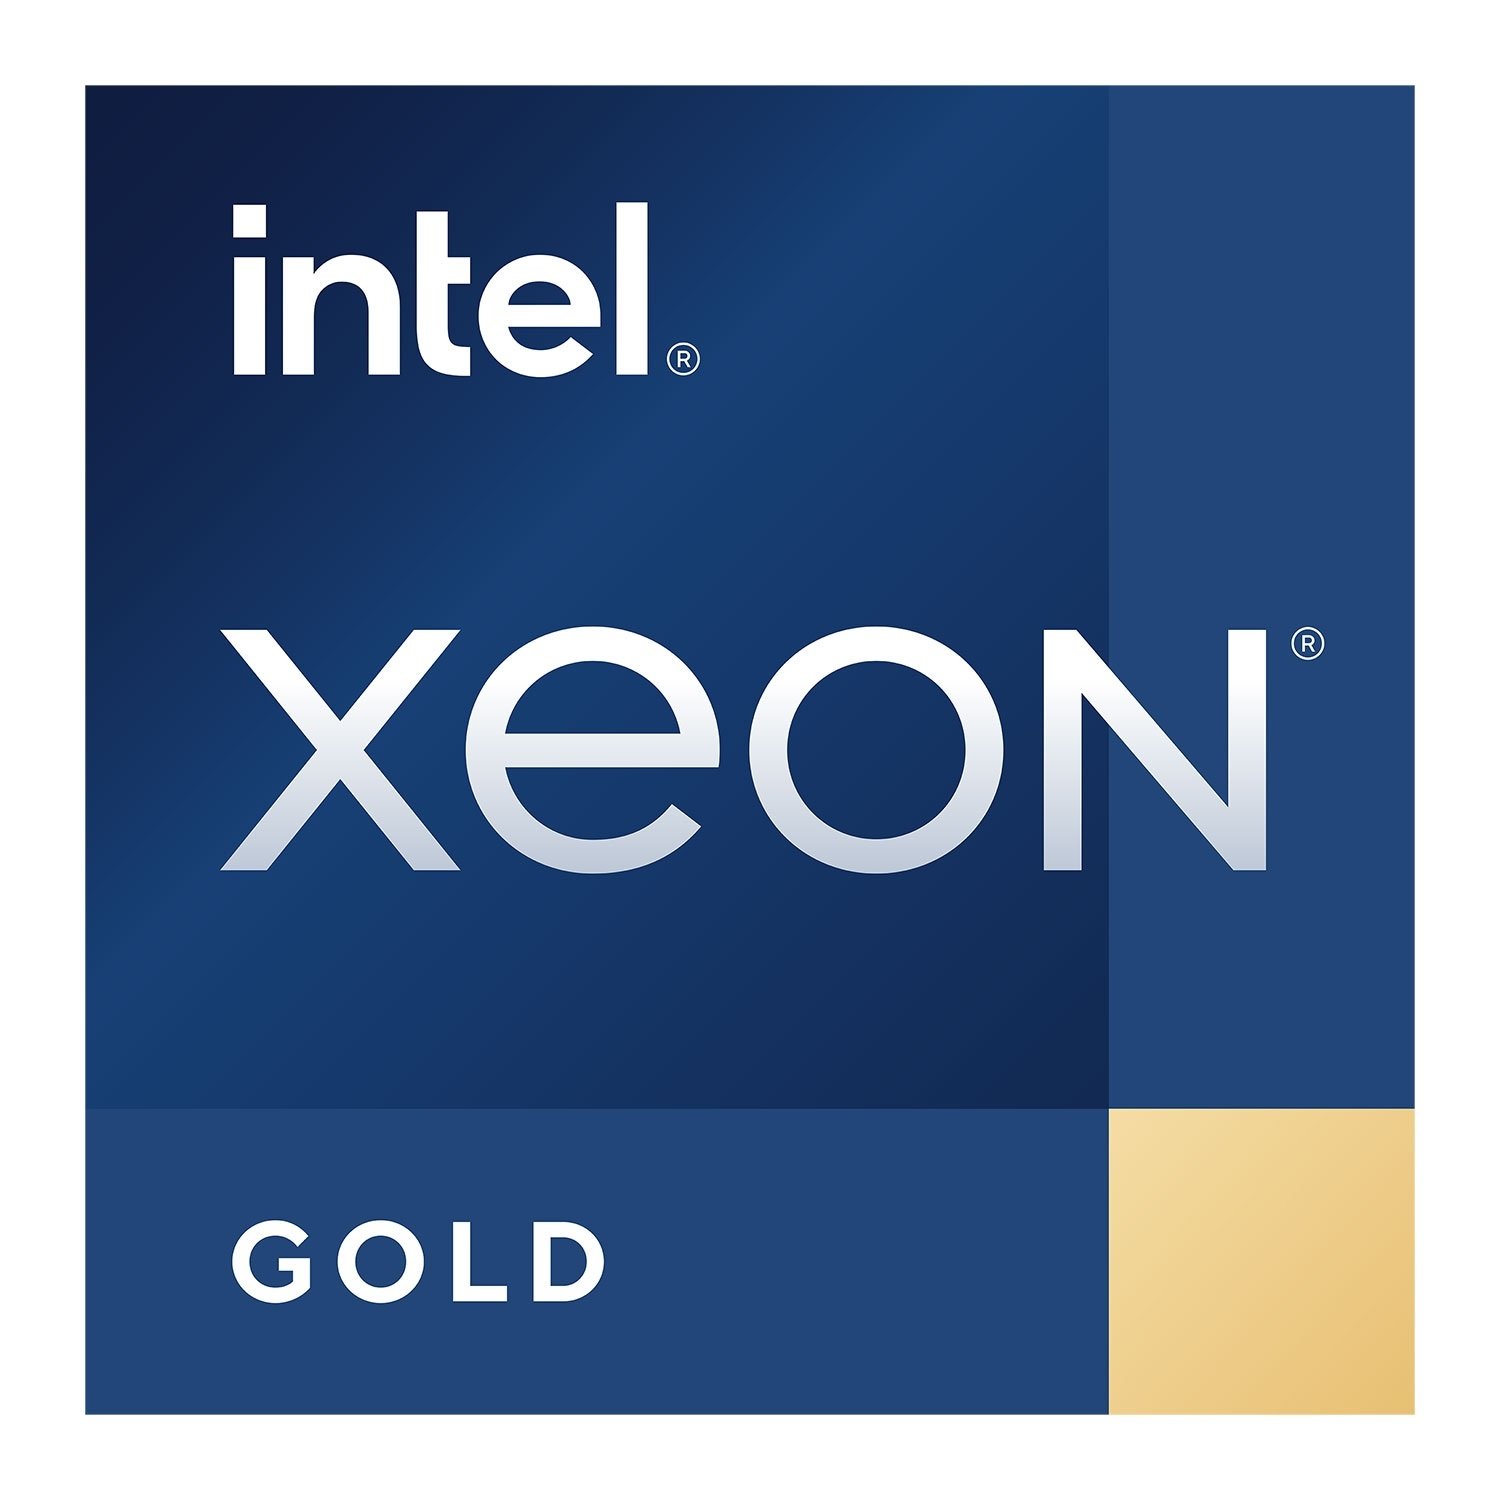 Intel Xeon Gold ICX 5320 @ 2.20 GHz, 26C/52T, 2P, 39MB, 185W, LGA4189 - CD8068904659201